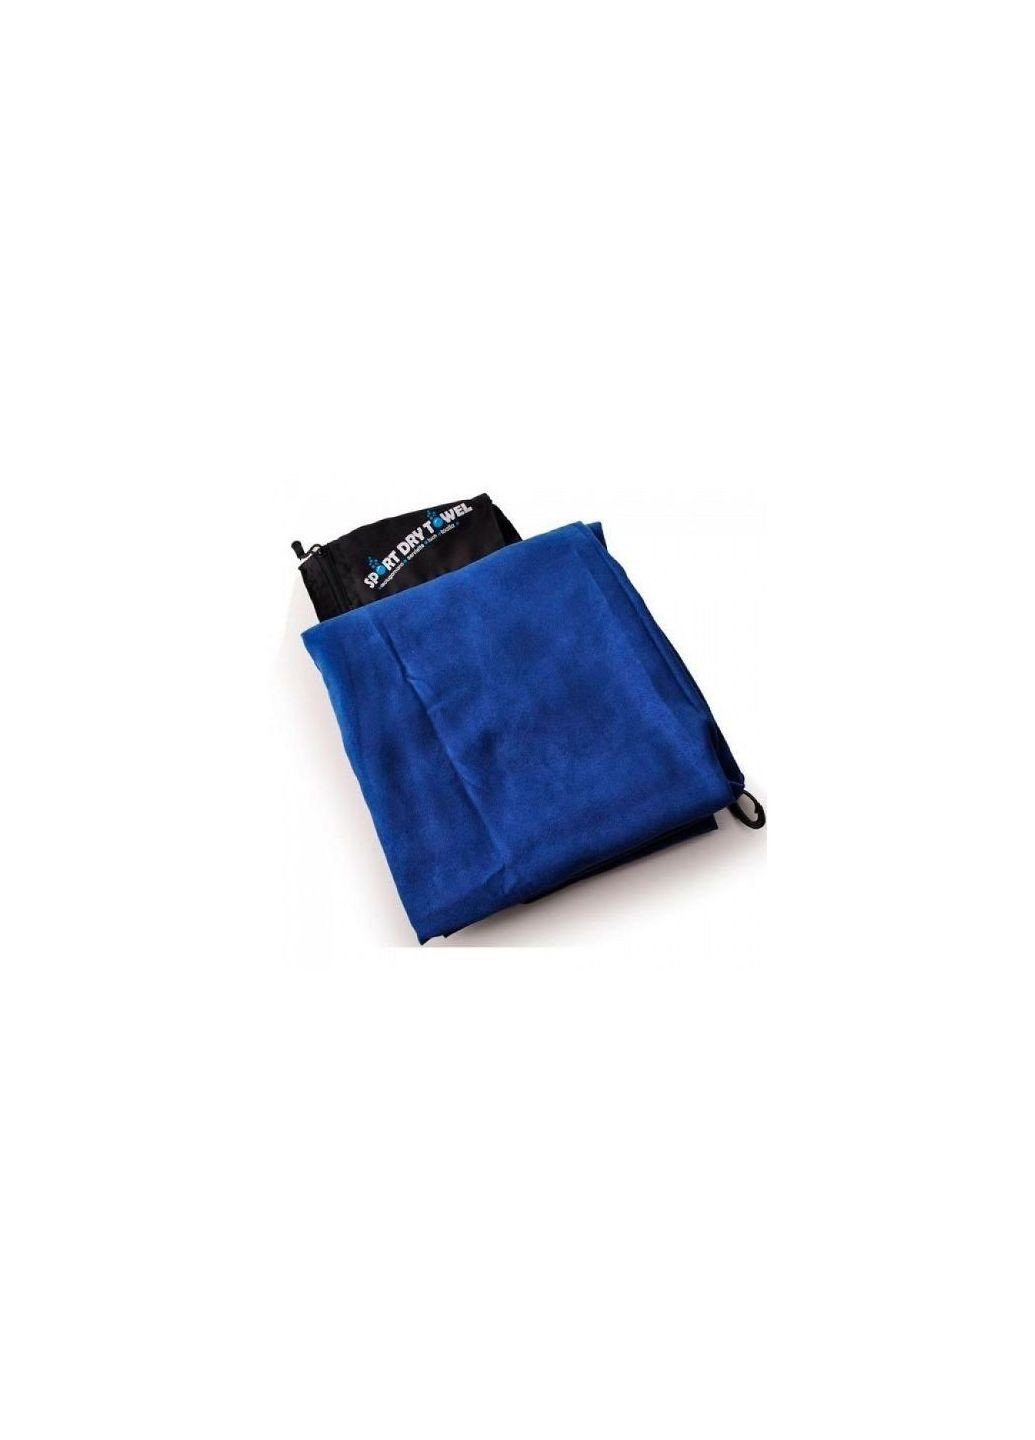 CamP полотенца sport dry towel 60*120 cm комбинированный производство -